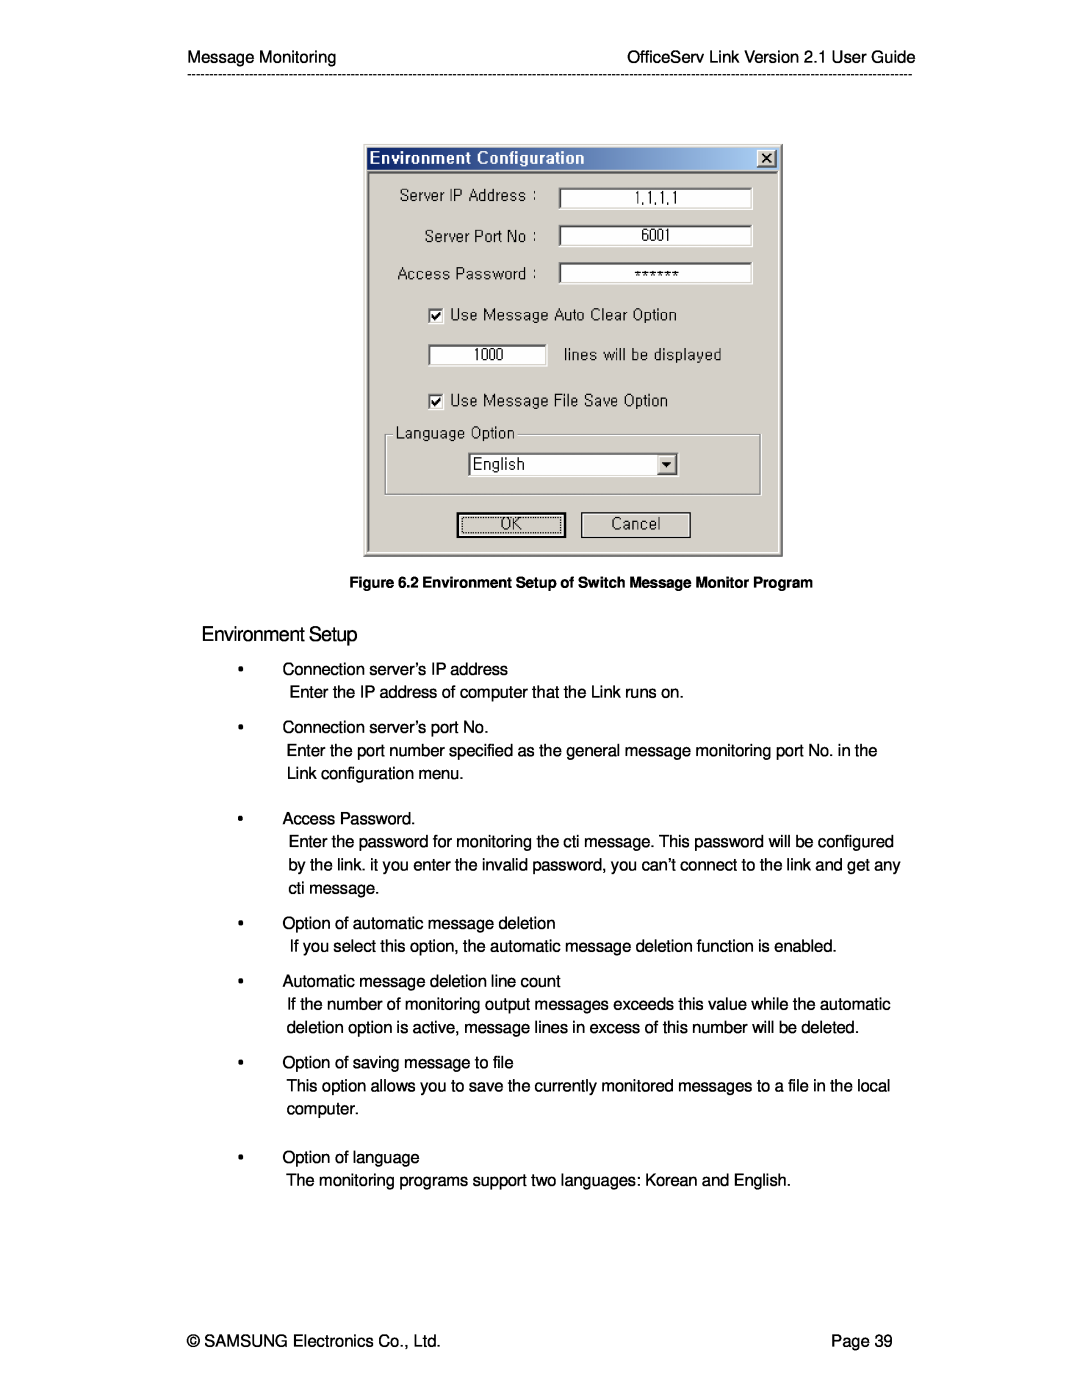 Samsung Version 2.1 manual 2 Environment Setup of Switch Message Monitor Program 